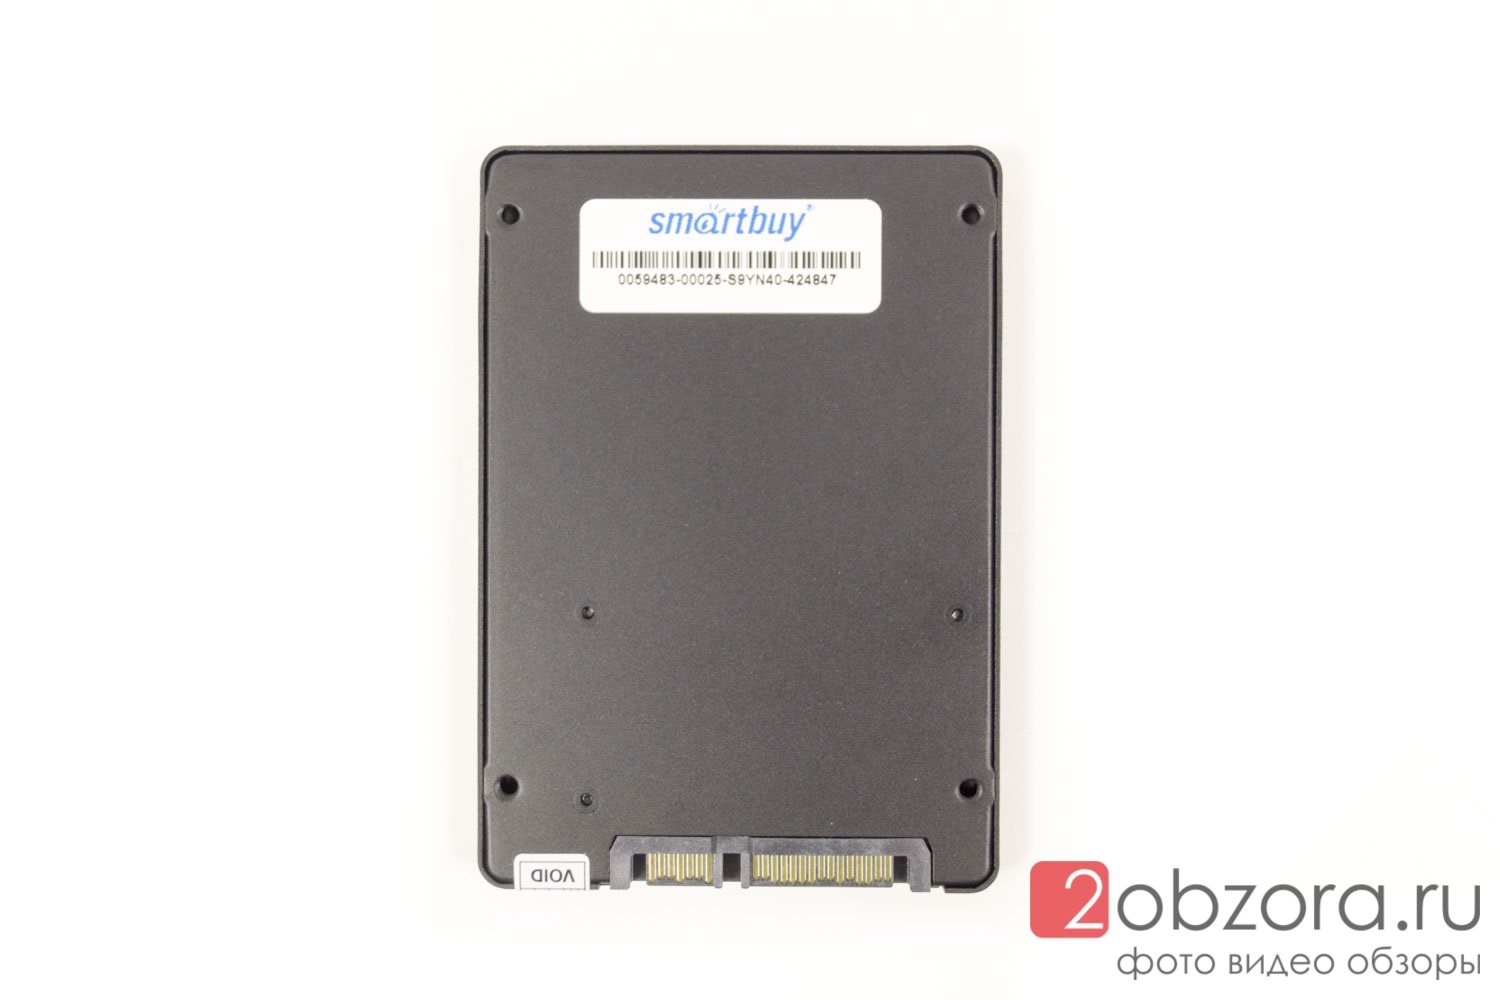 SSD диск SMARTBUY Jolt 120 Гб TLC 3D NAND (SB120GB-JLT-25SAT3)